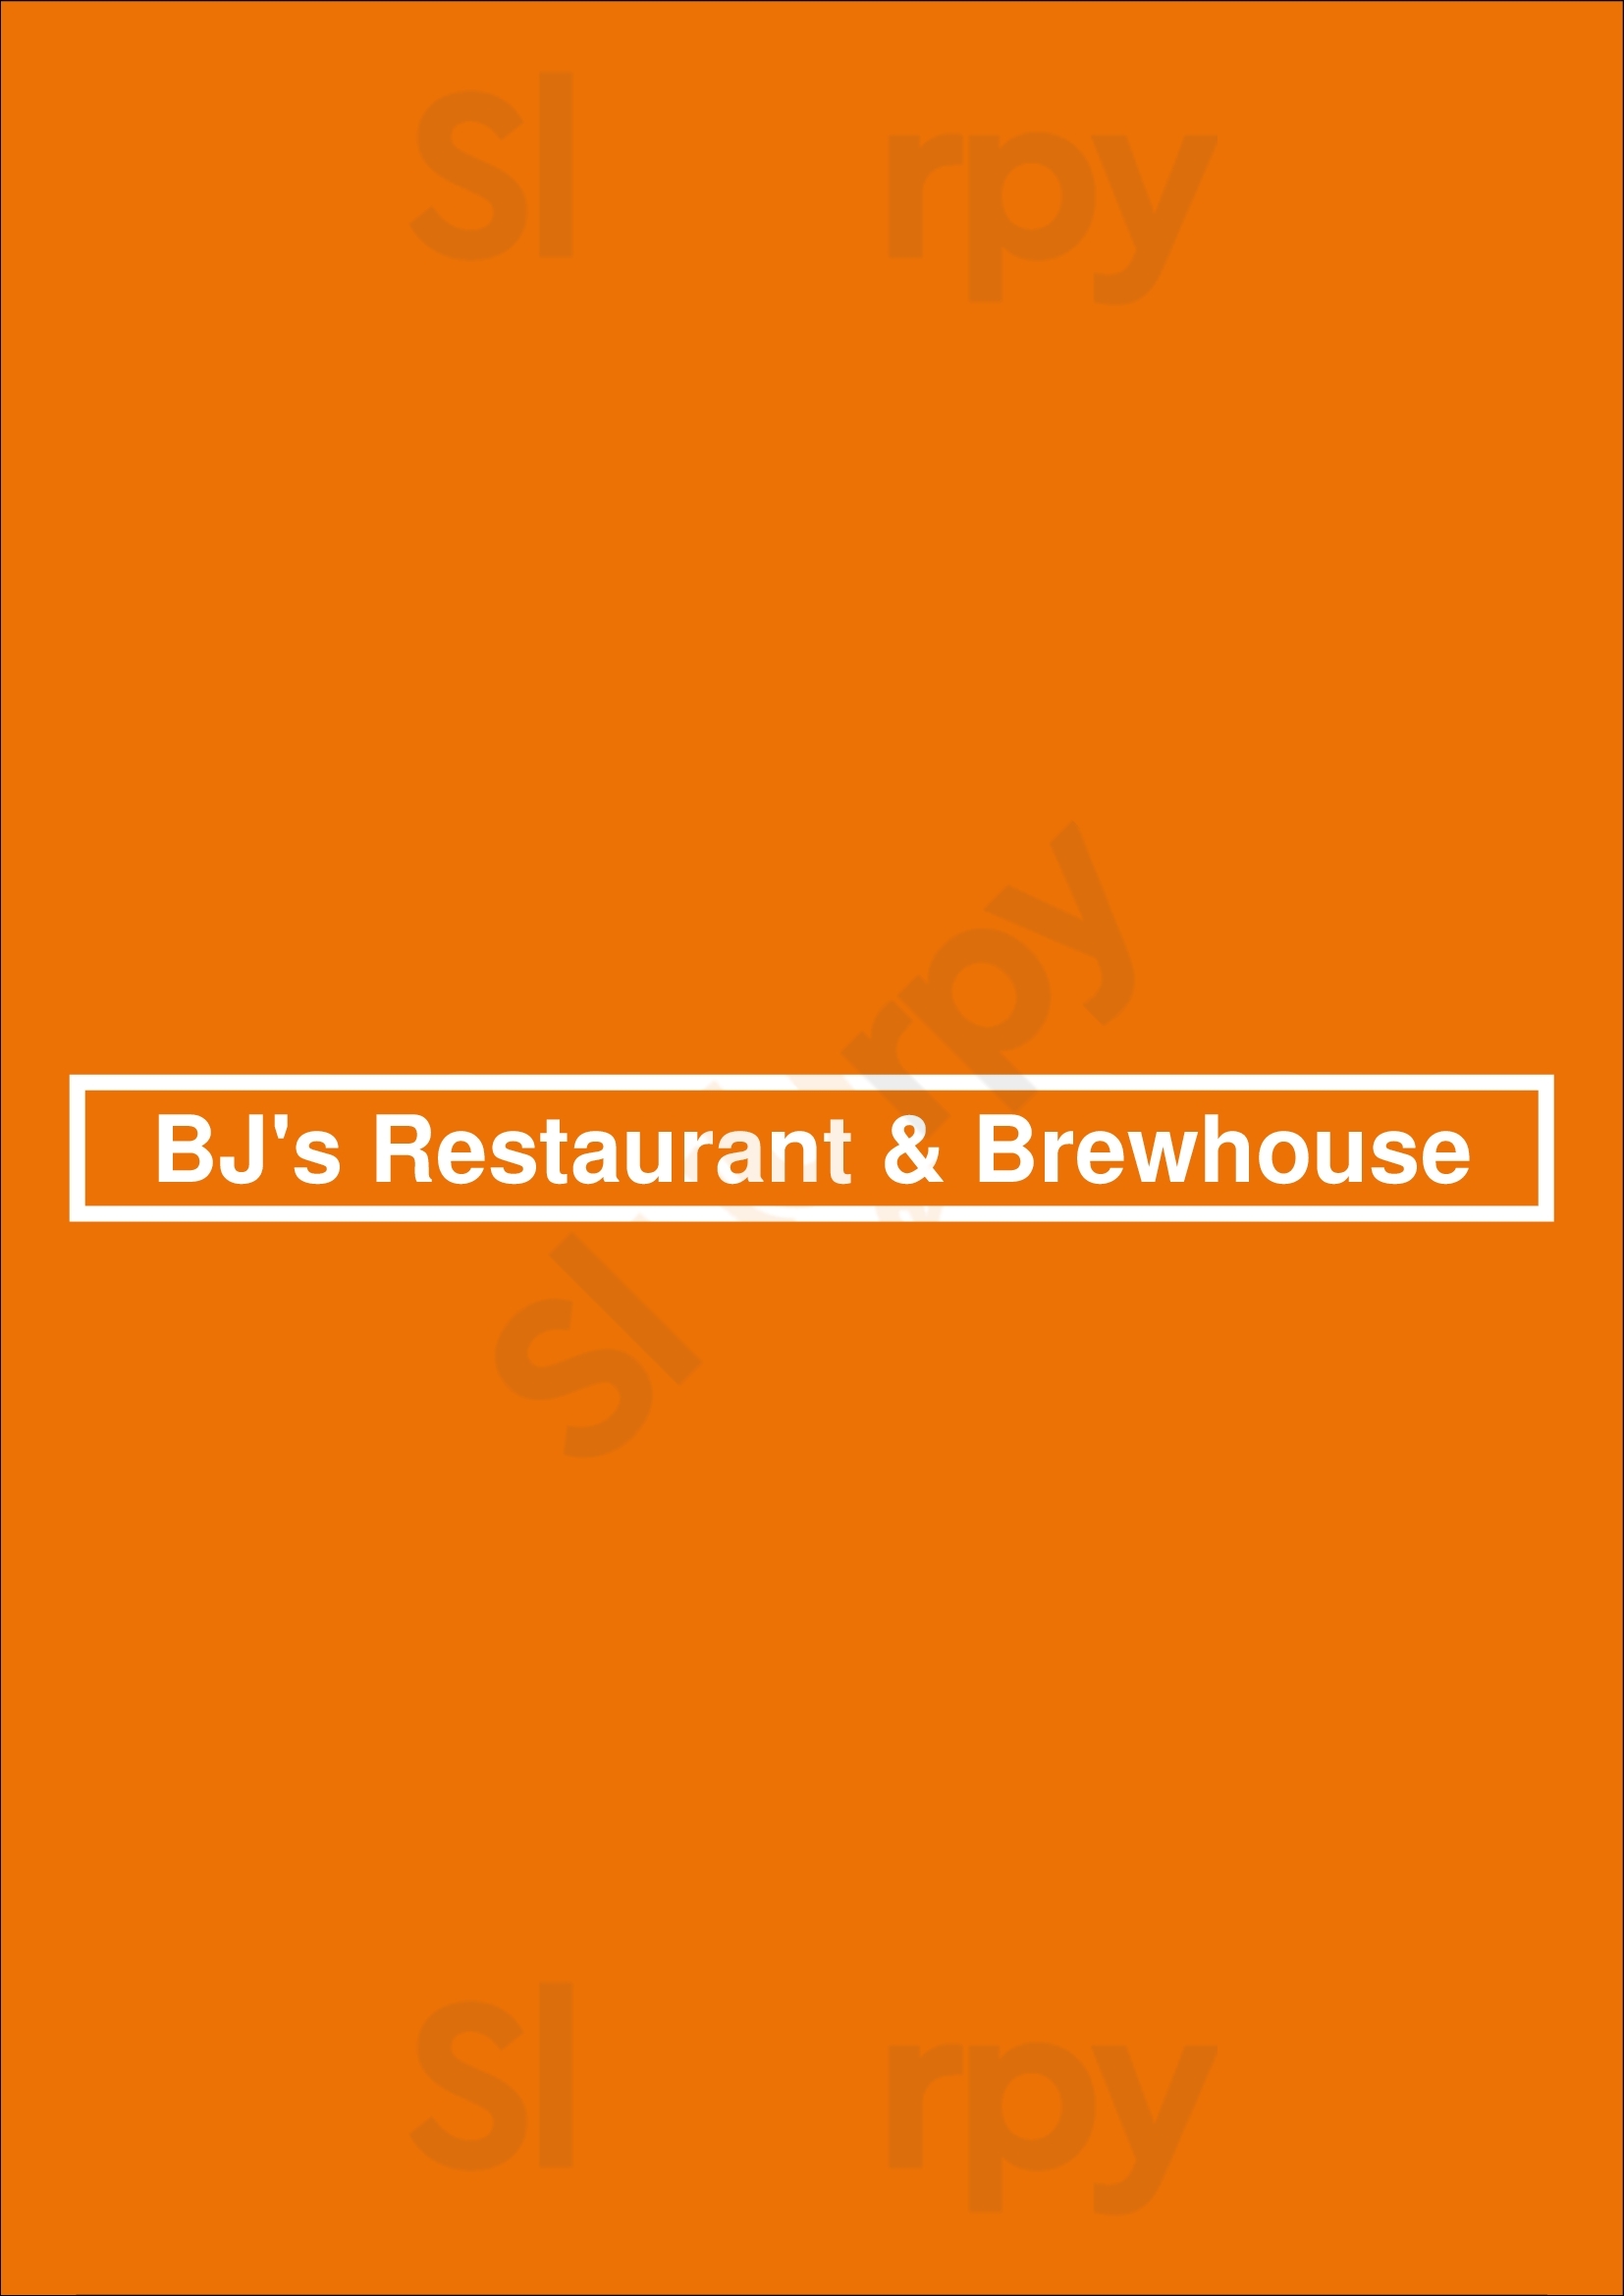 Bj's Restaurant & Brewhouse Los Angeles Menu - 1